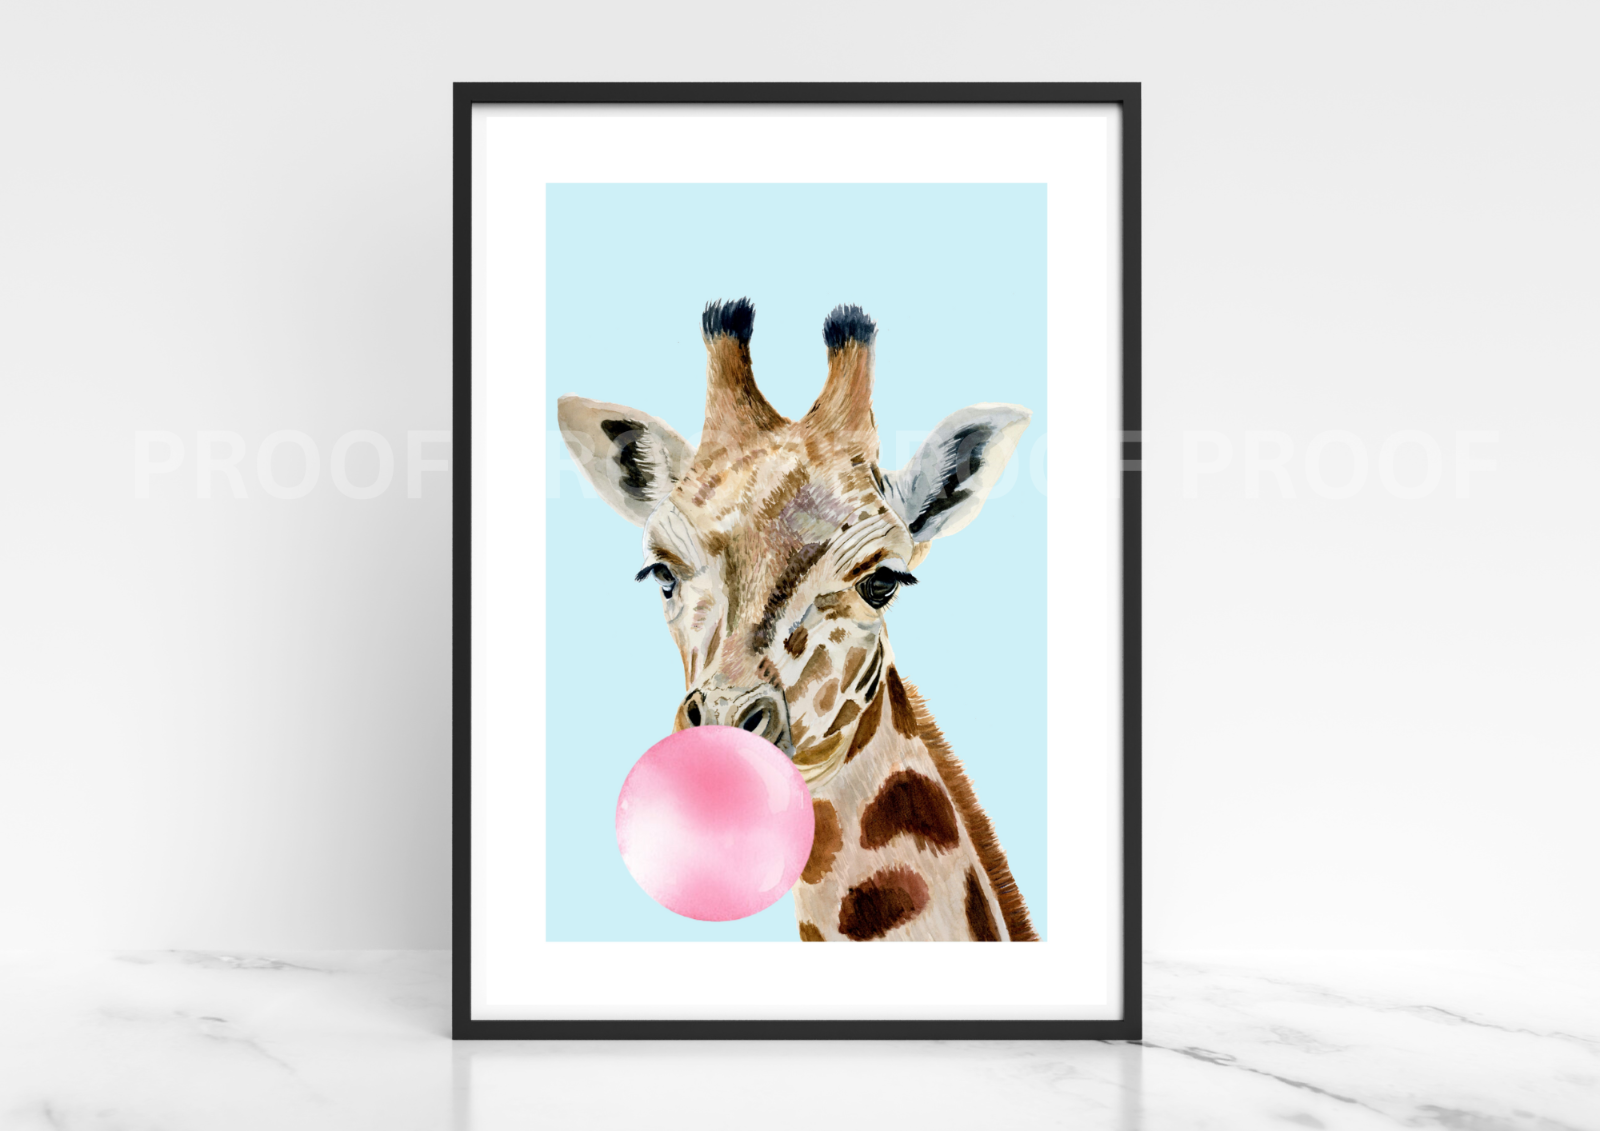 Giraffe Blowing Bubble Poster Print Bubble Gum Giraffe A5 A4 A3